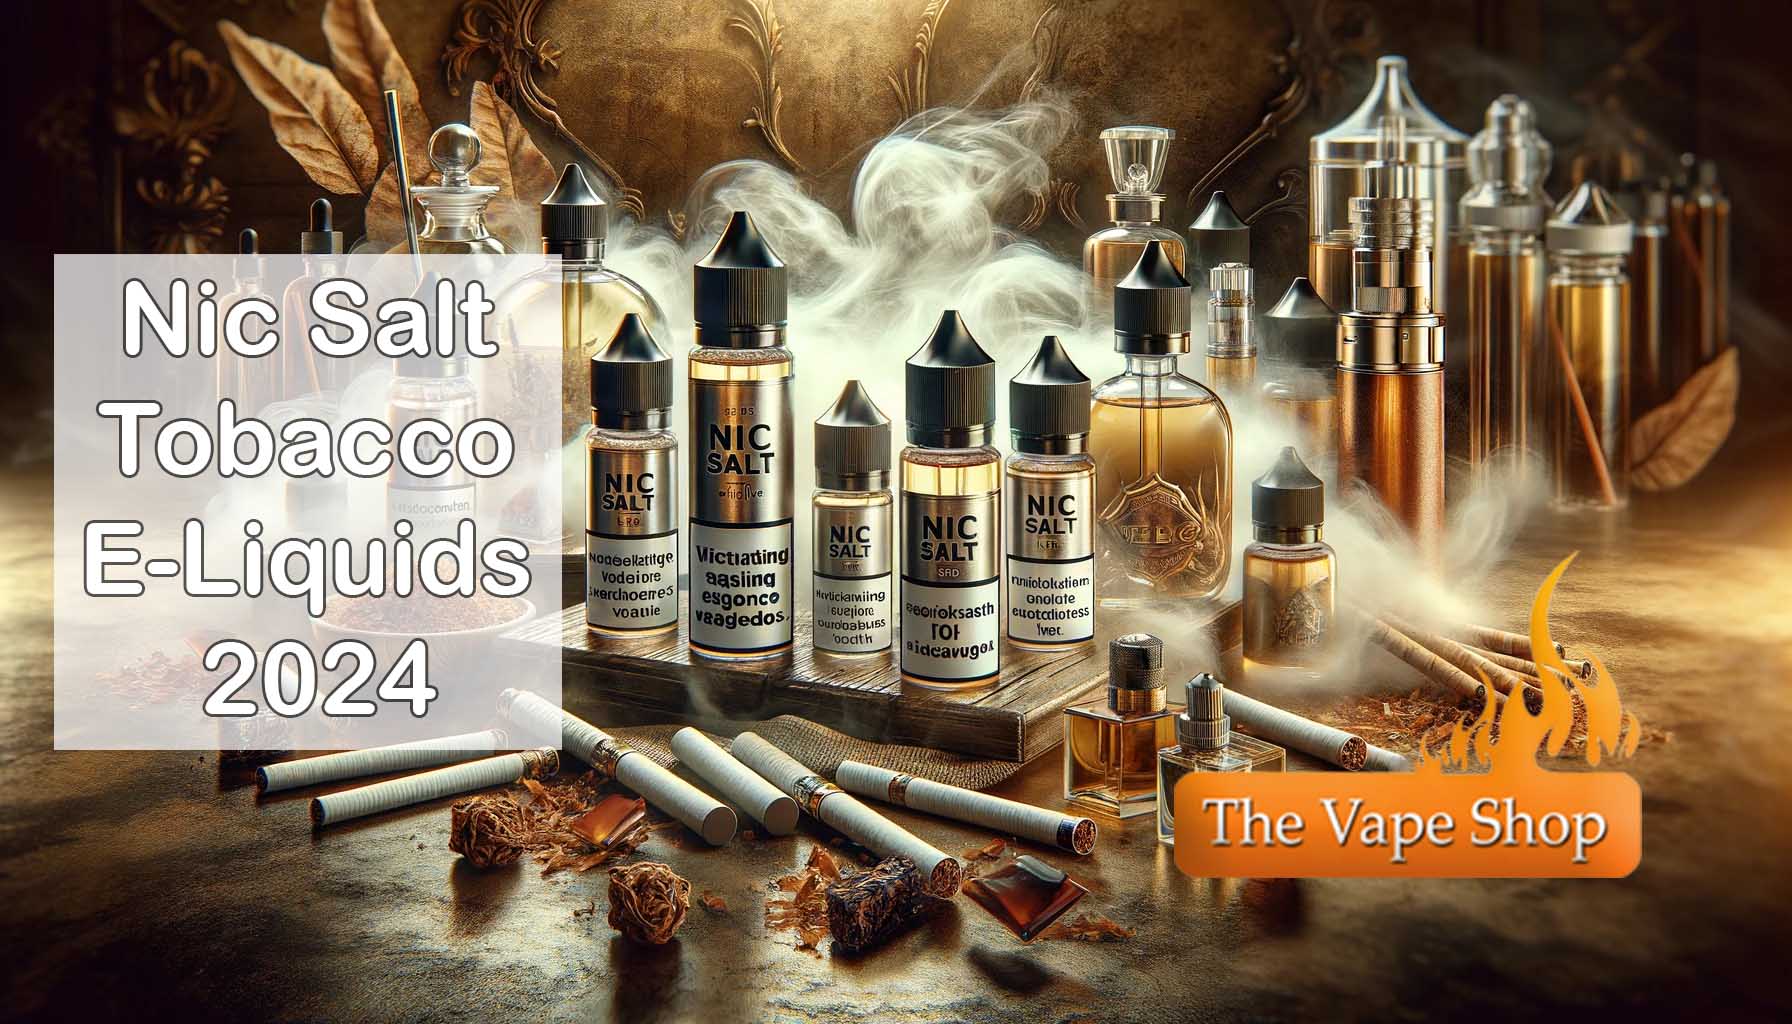 All The Best Nic Salt Tobacco E-Liquids 2024 by The Vape Shop